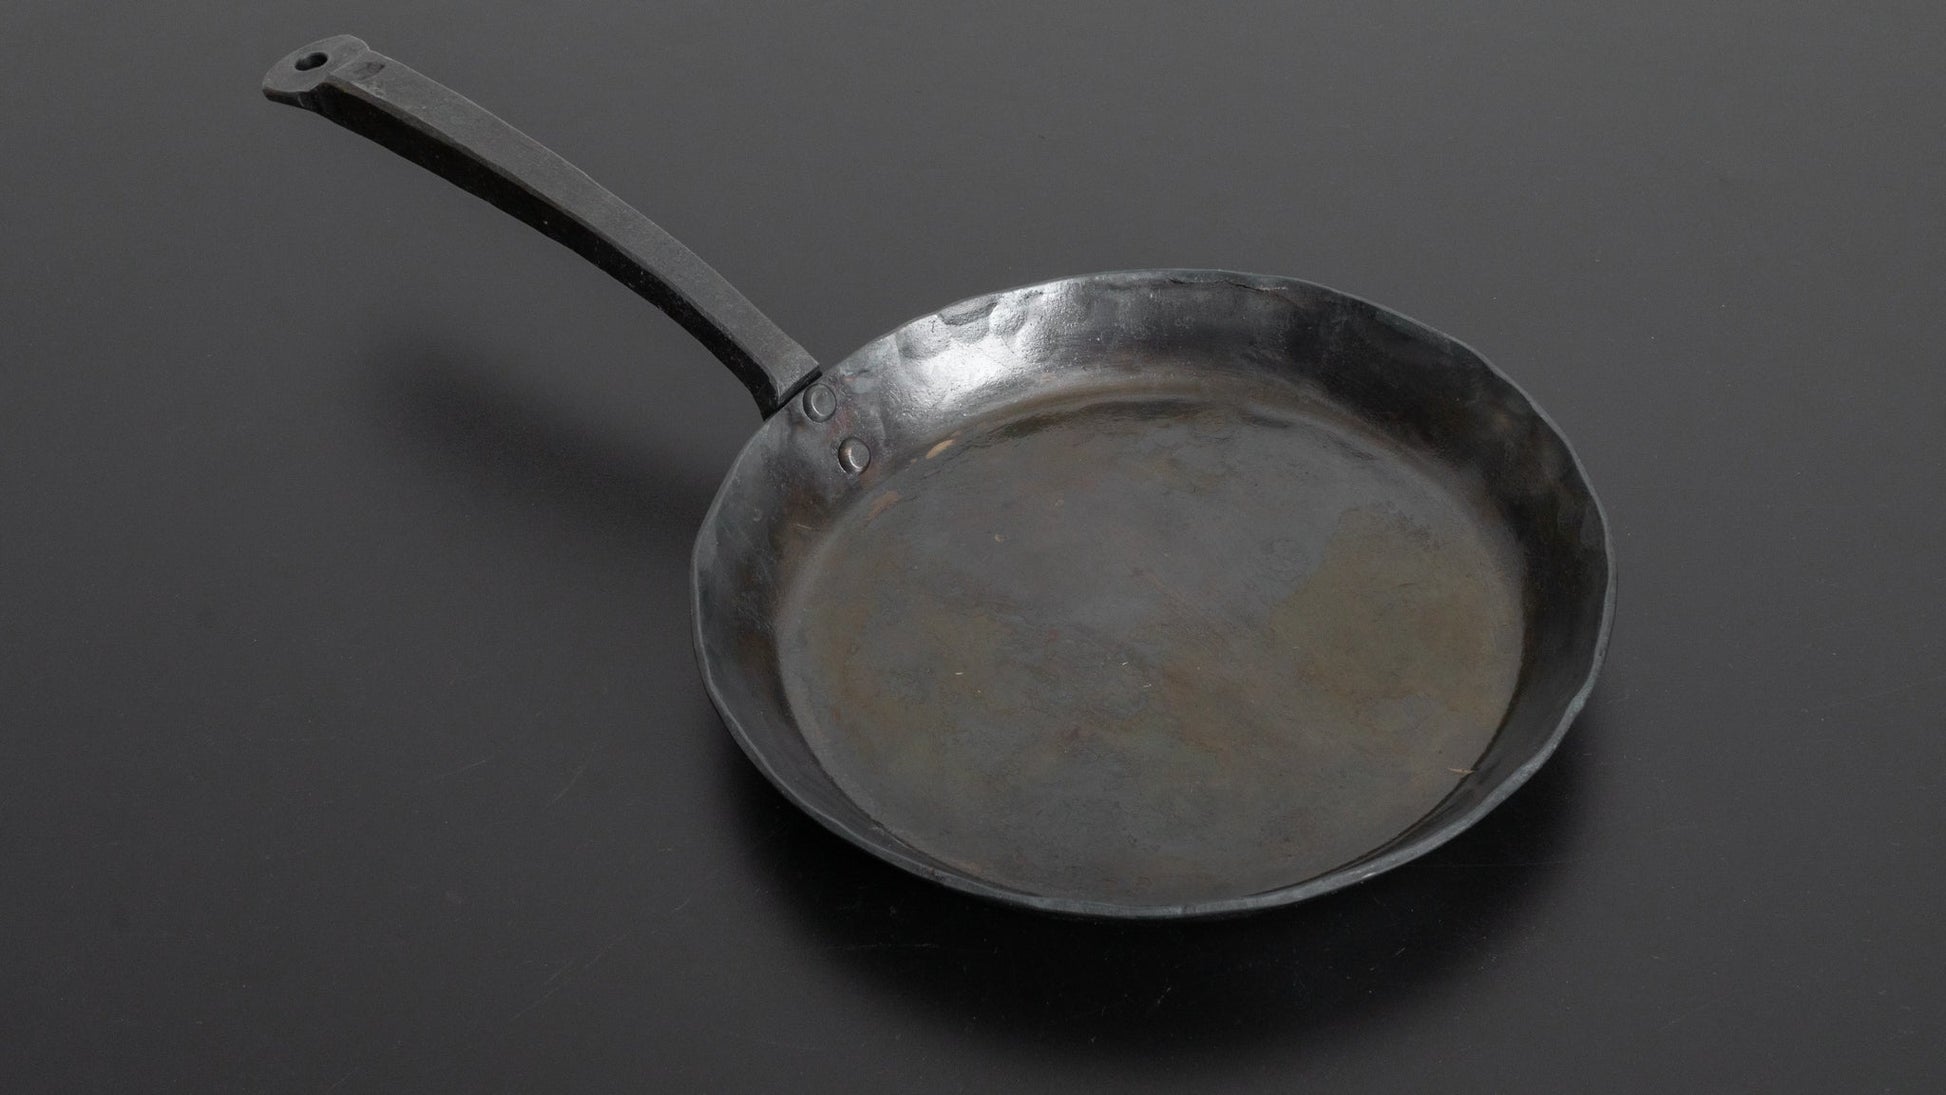 Kanatoko Hand Forged Iron Frying Pan 180mm Bottom Size (3mm/ Shallow) - HITOHIRA